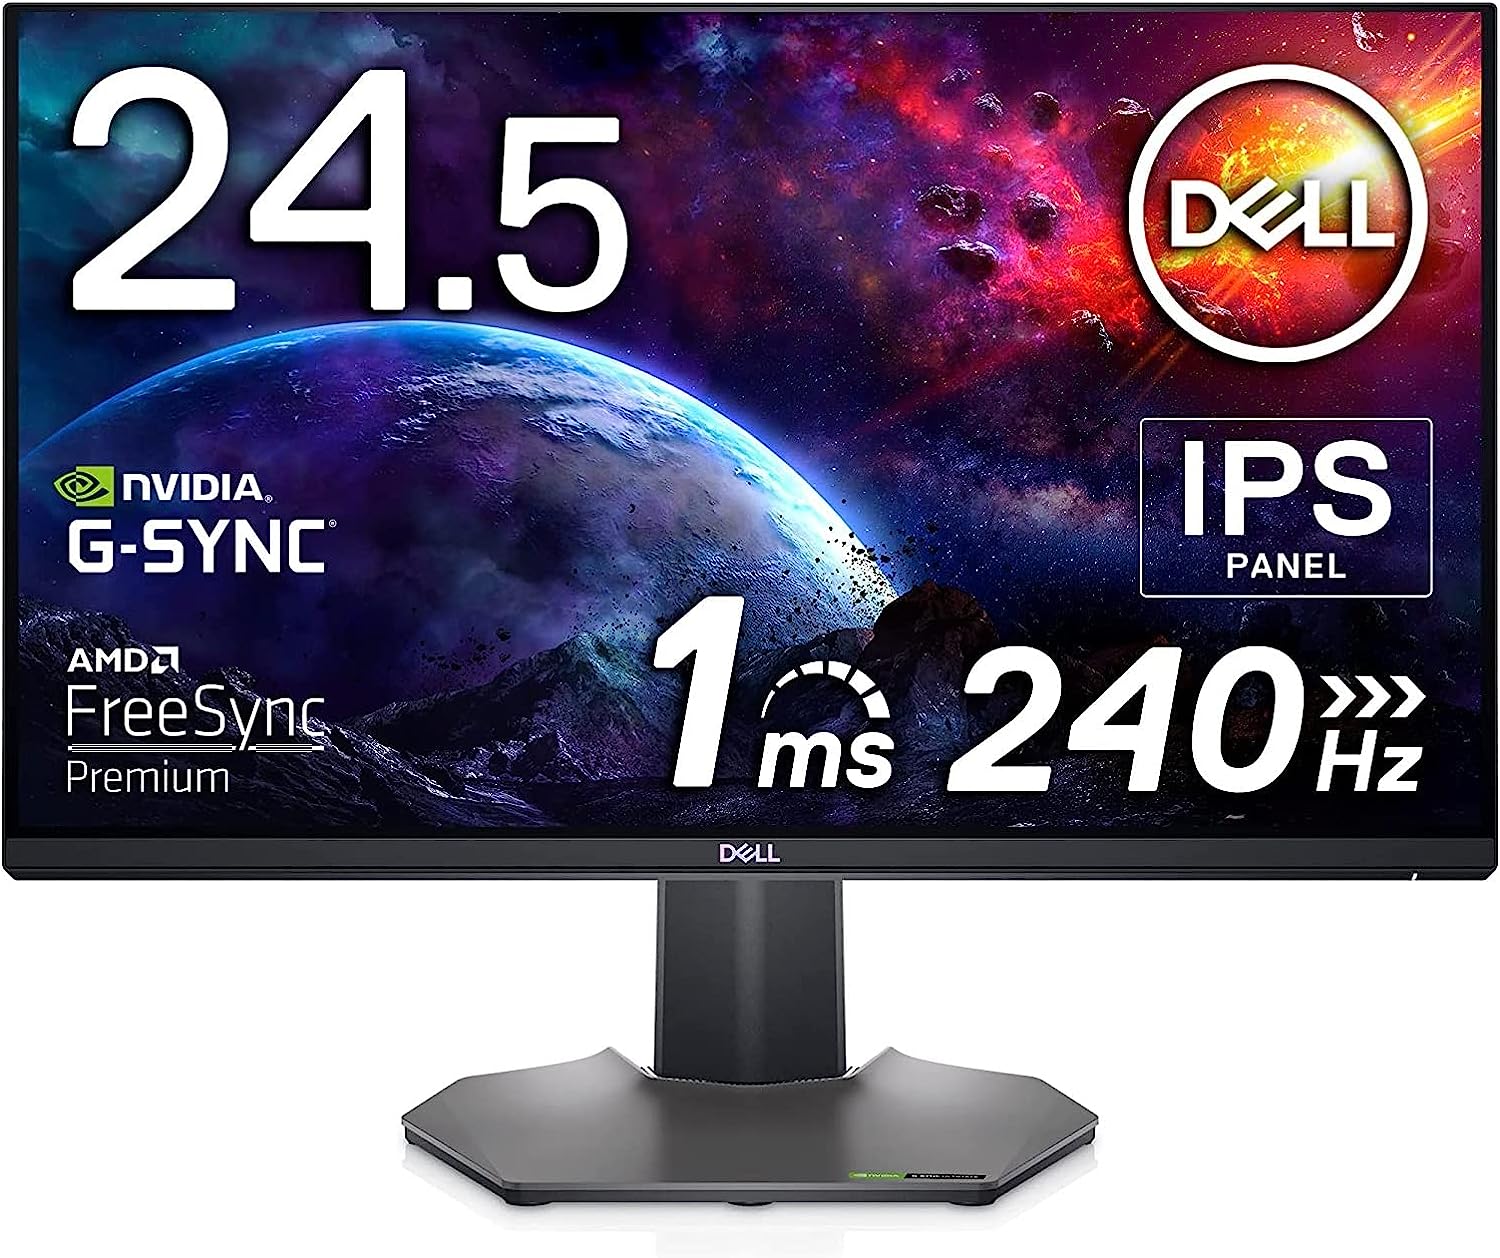 Dell 240Hz Gaming Monitor 24.5 Inch Full HD Monitor [...]